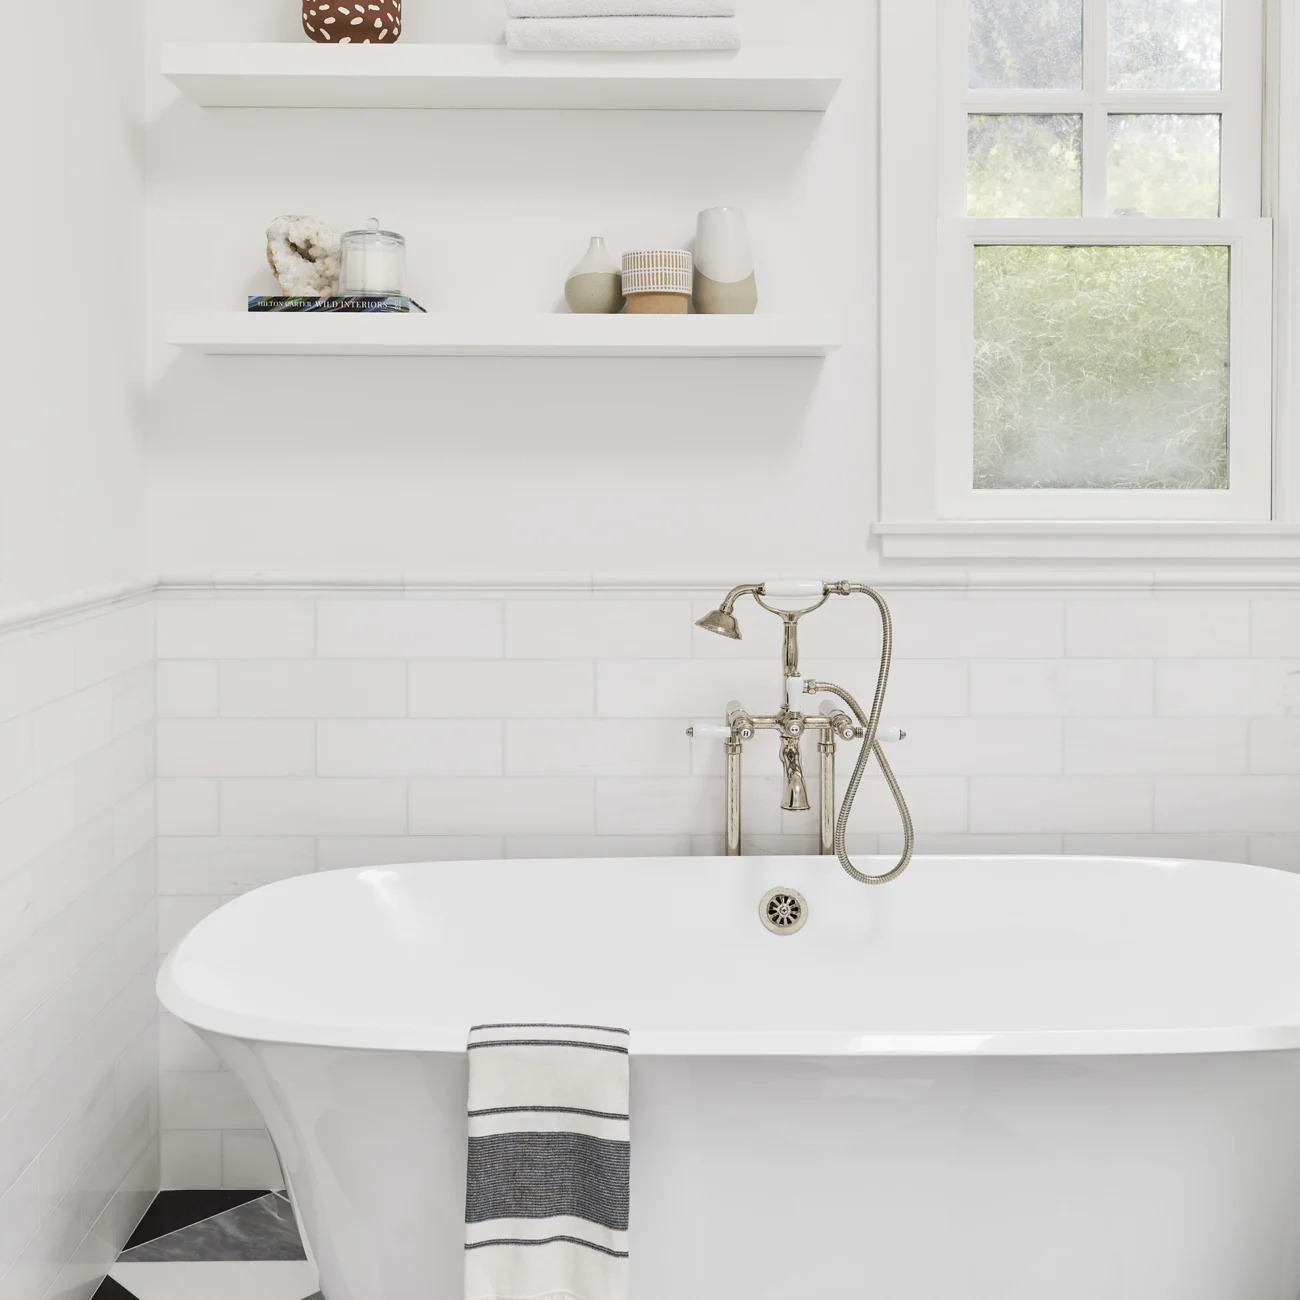 Christine Vroom Interiors | Marco | Modern white bathroom with soaker tub